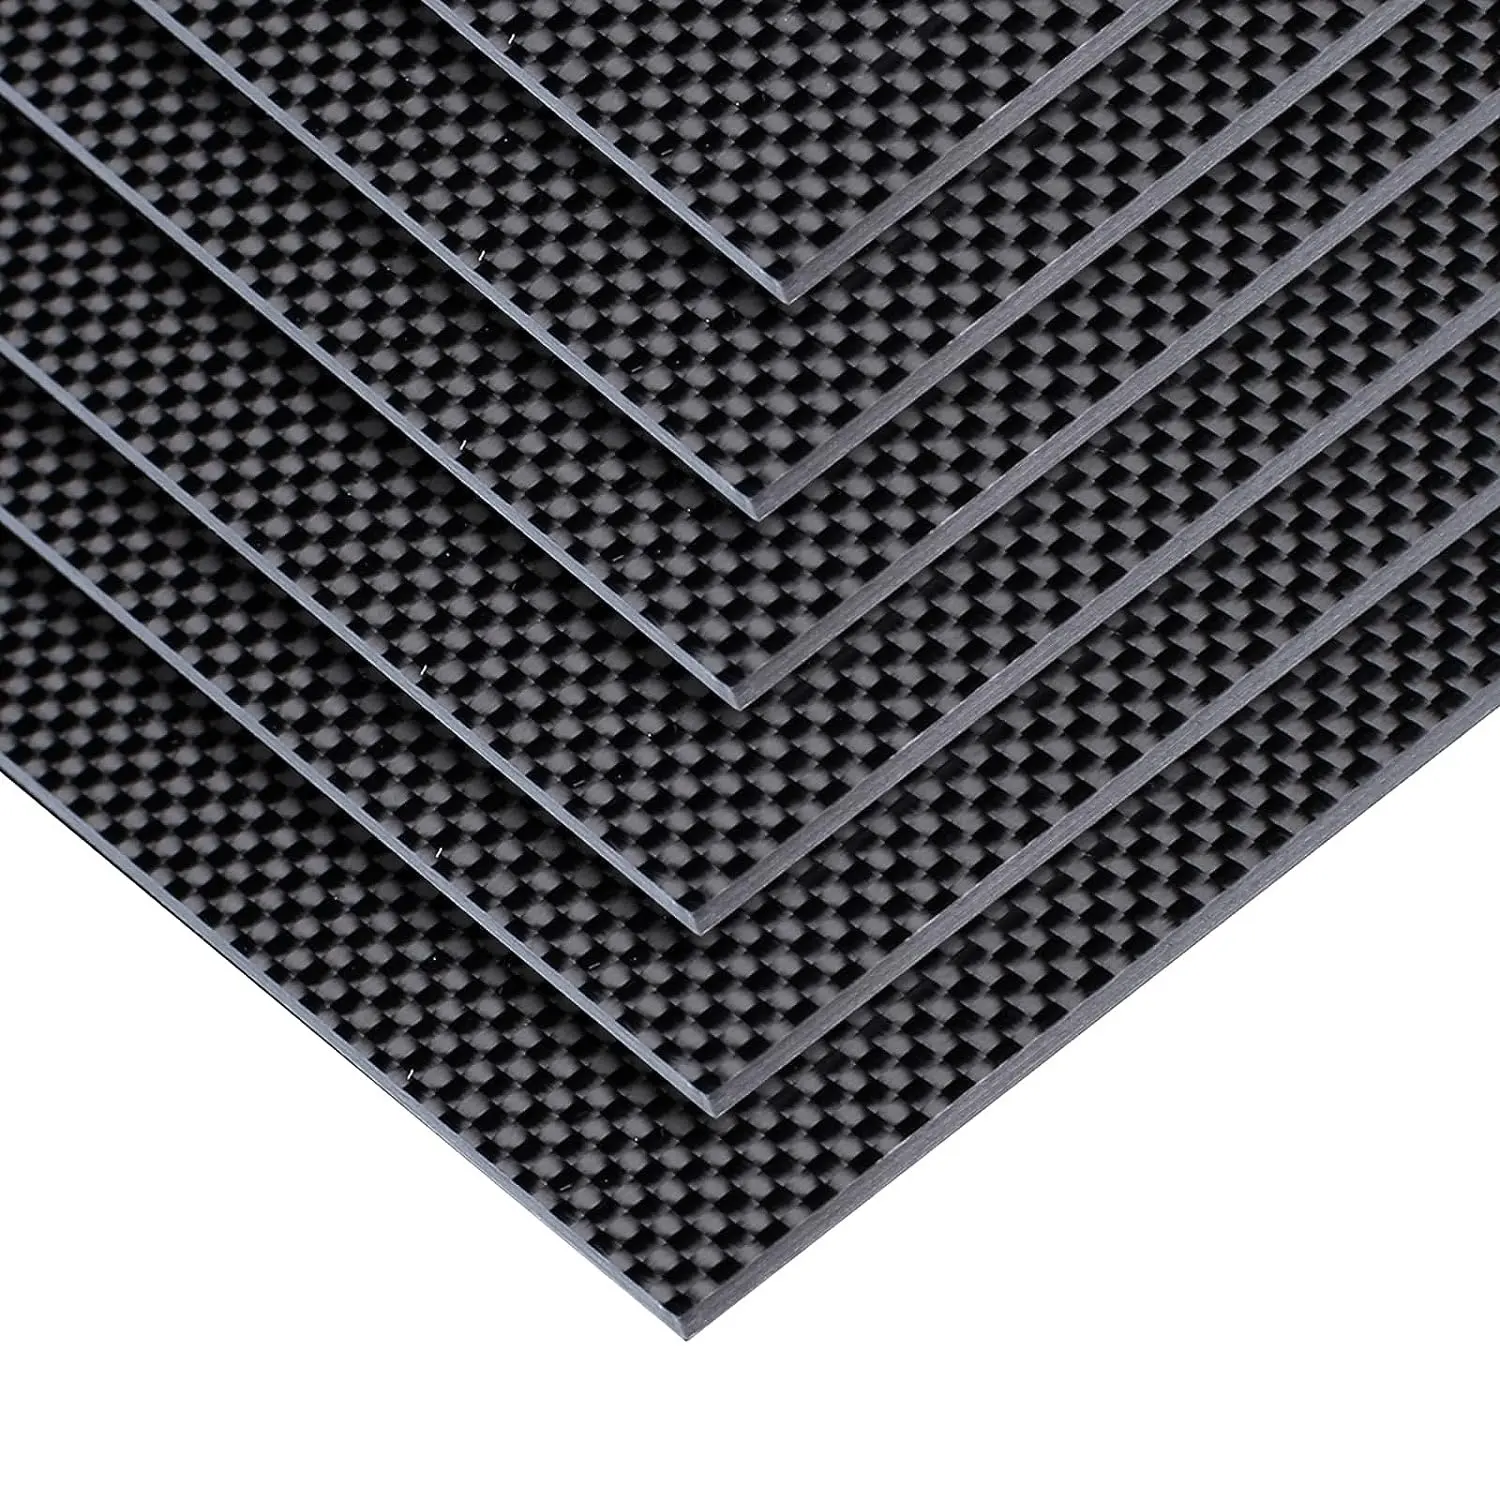 Fabrika 3k karbon fiber levha 500*500mm dövme 100% karbon fiber plaka duvar paneli